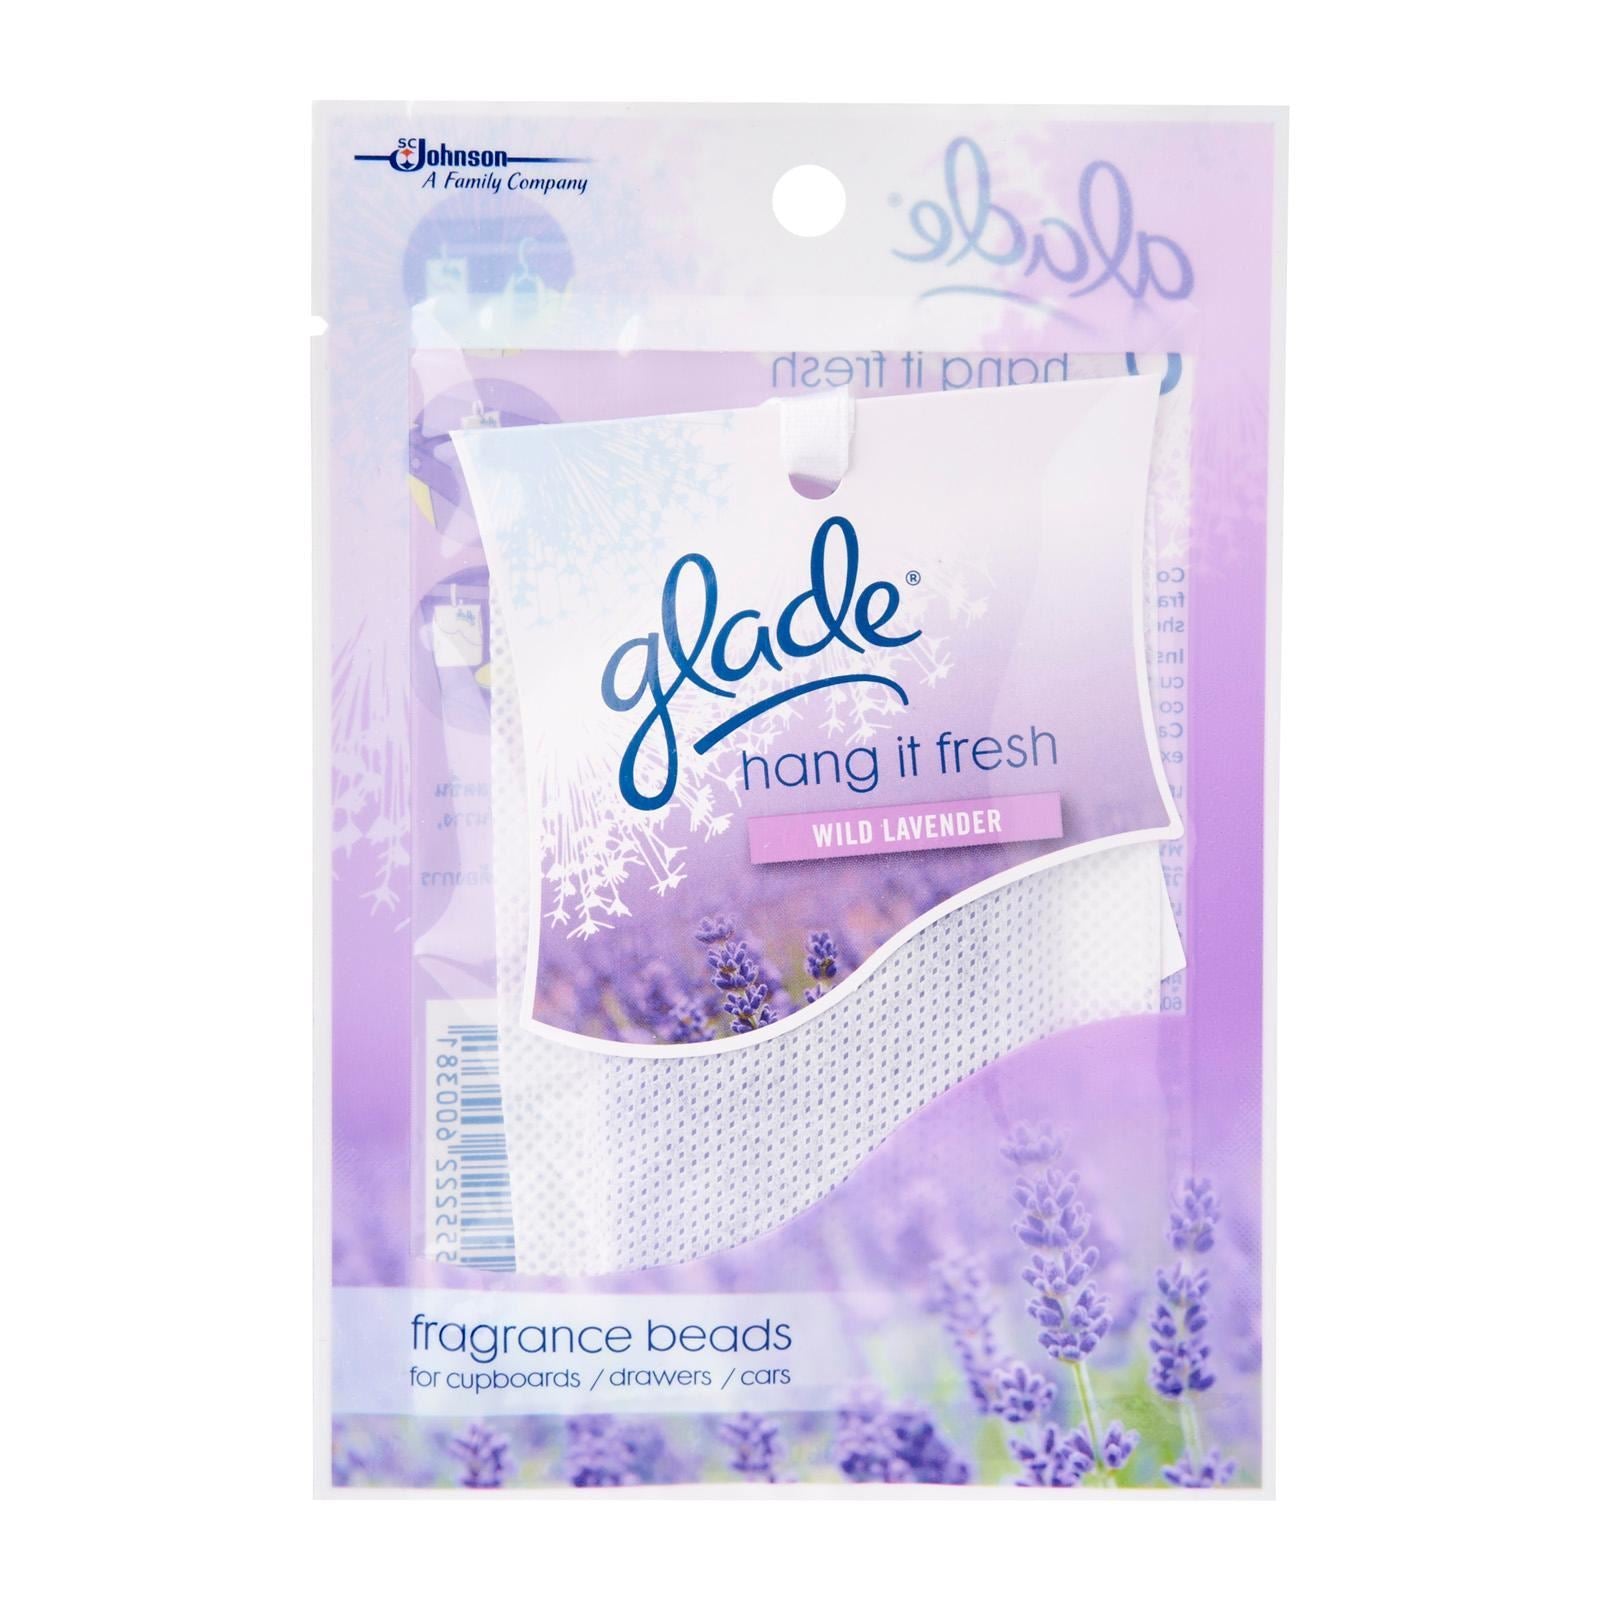 Glade Hang It Fresh Wild Lavender Fragrance Beads